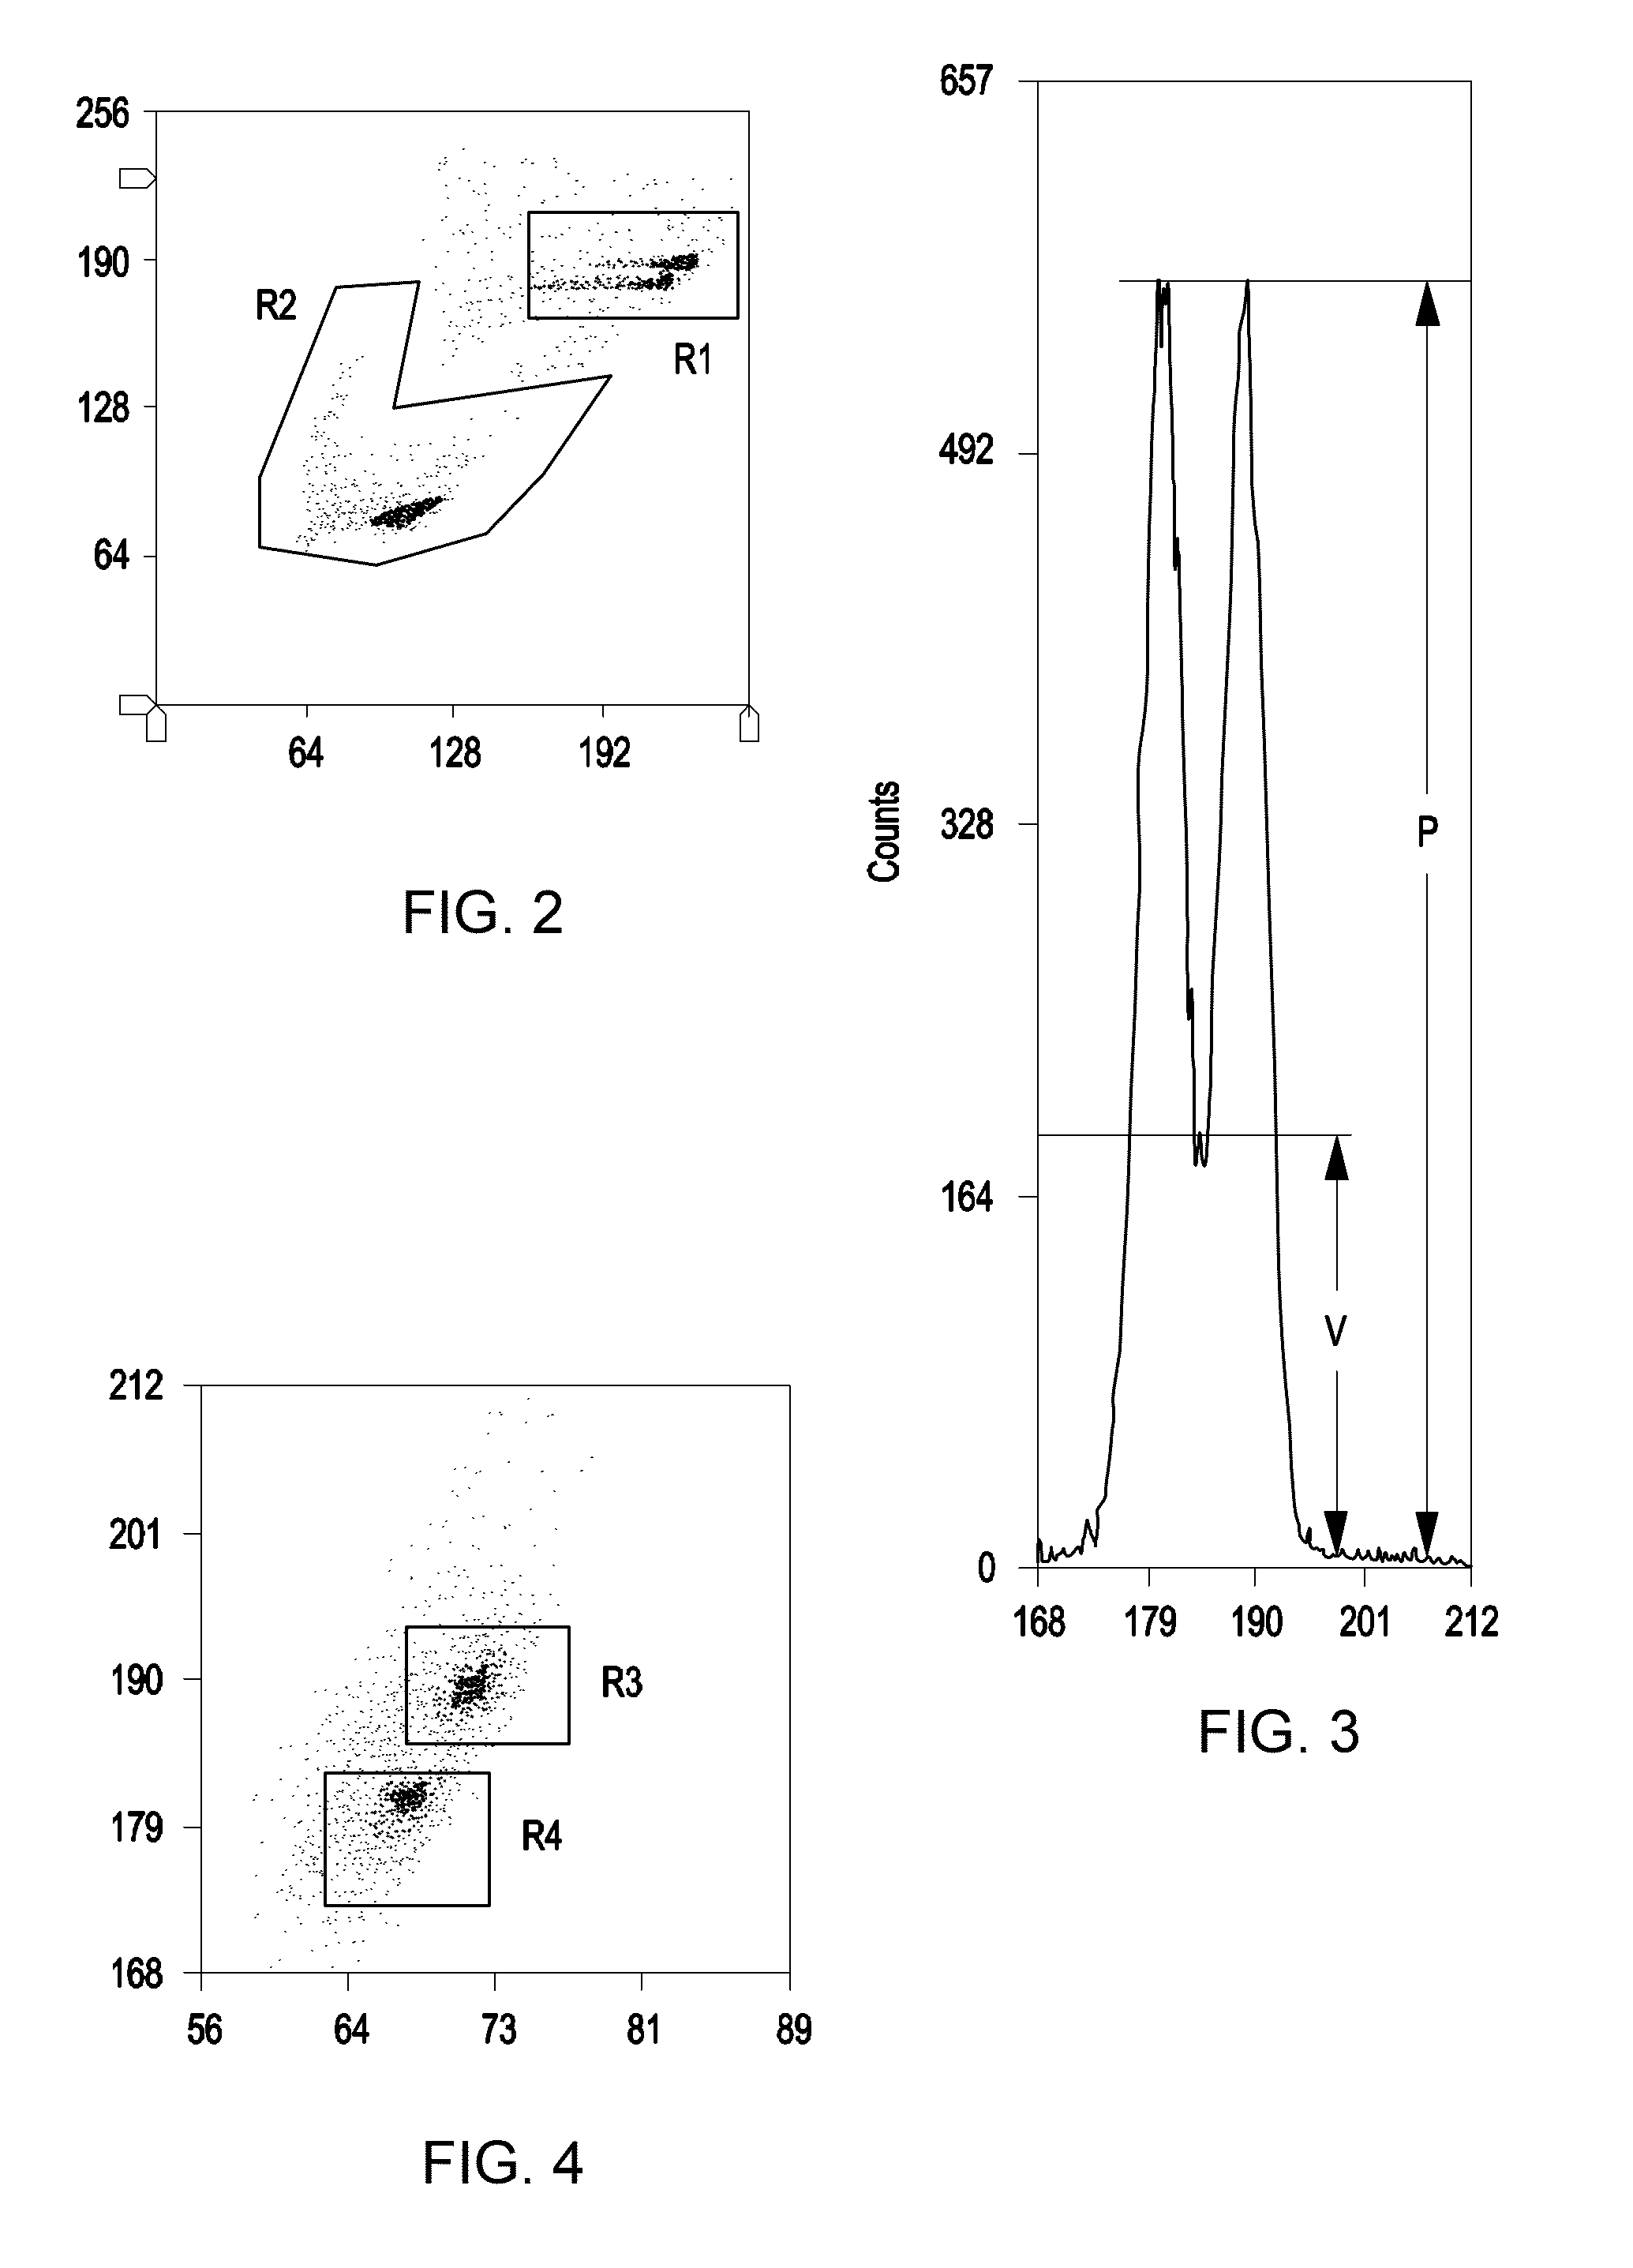 Sex sorted sperm demonstrating a dose response and methods of producing sex sorted sperm demonstrating a dose response